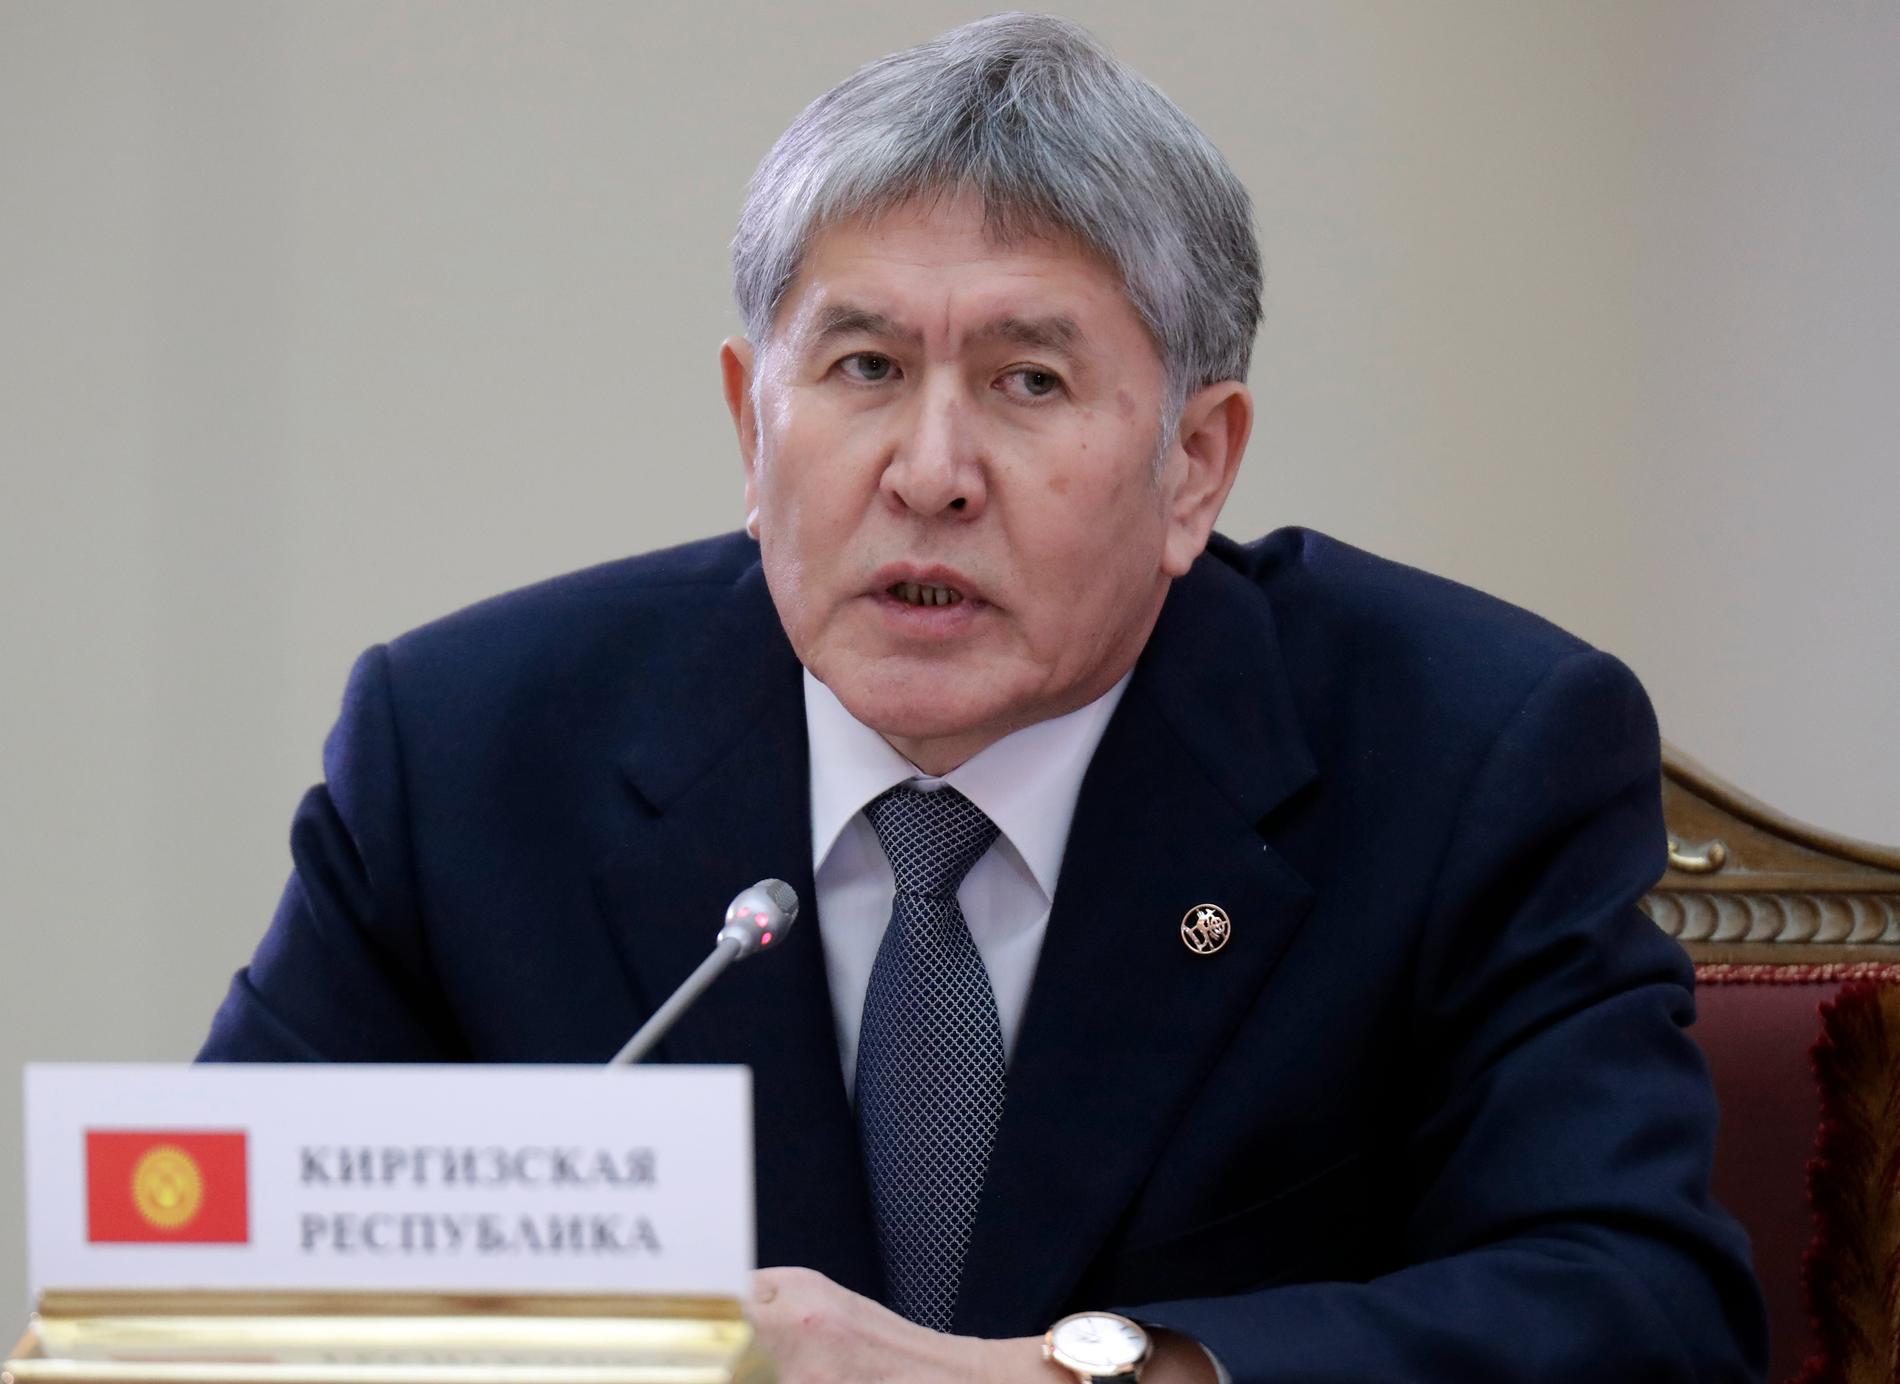 Kirgizistans expresident Almazbek Atambajev under ett möte i Sankt Petersburg i december 2016. Arkivbid.